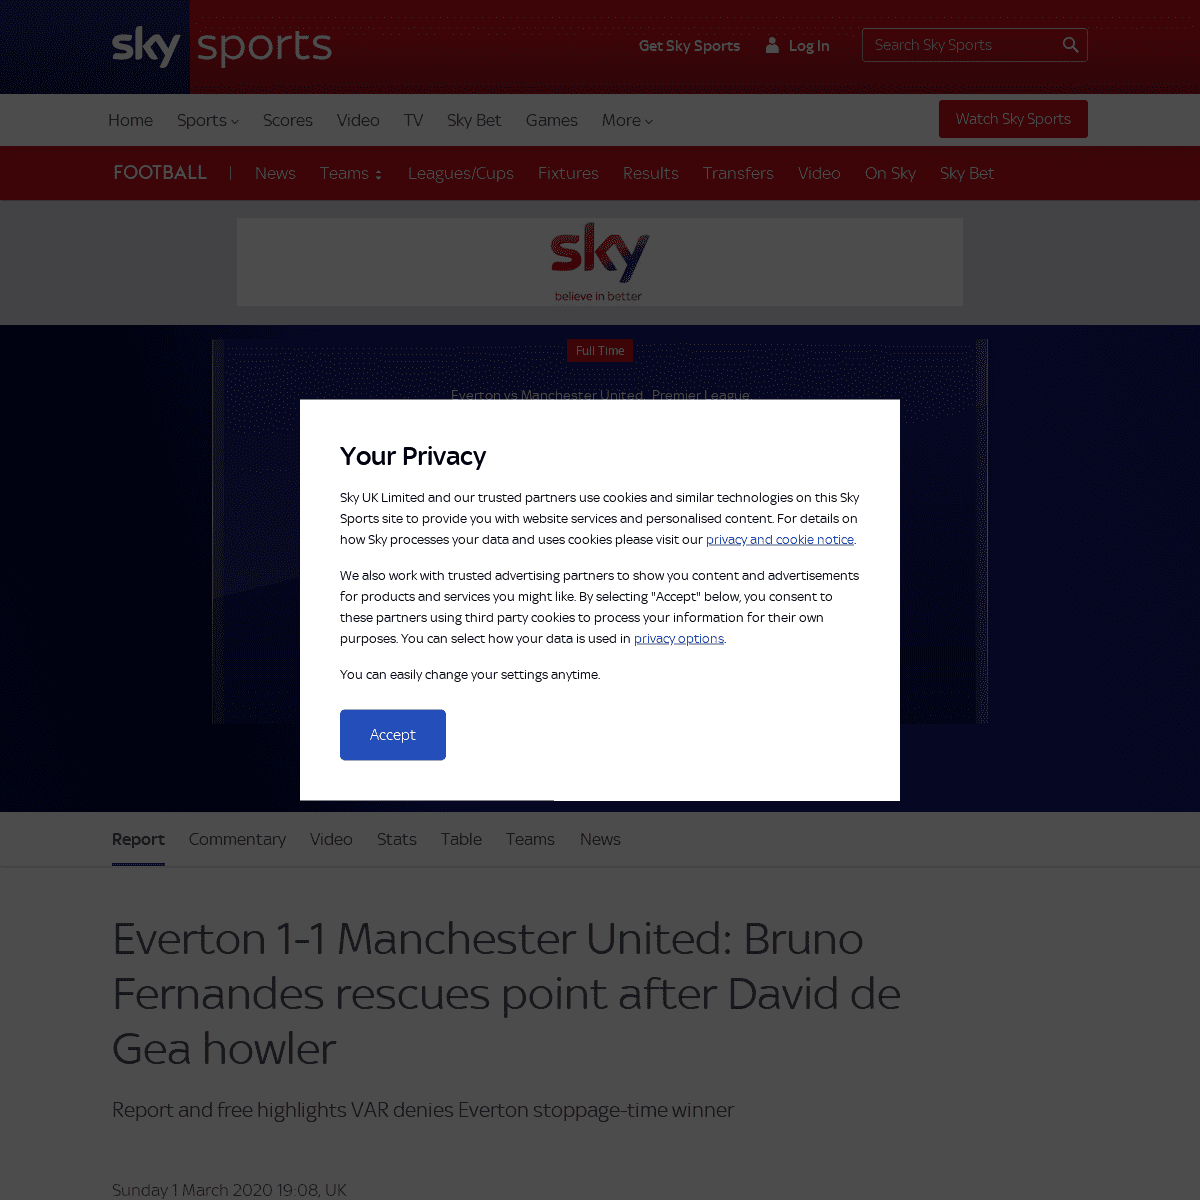 A complete backup of www.skysports.com/football/everton-vs-man-utd/report/408254